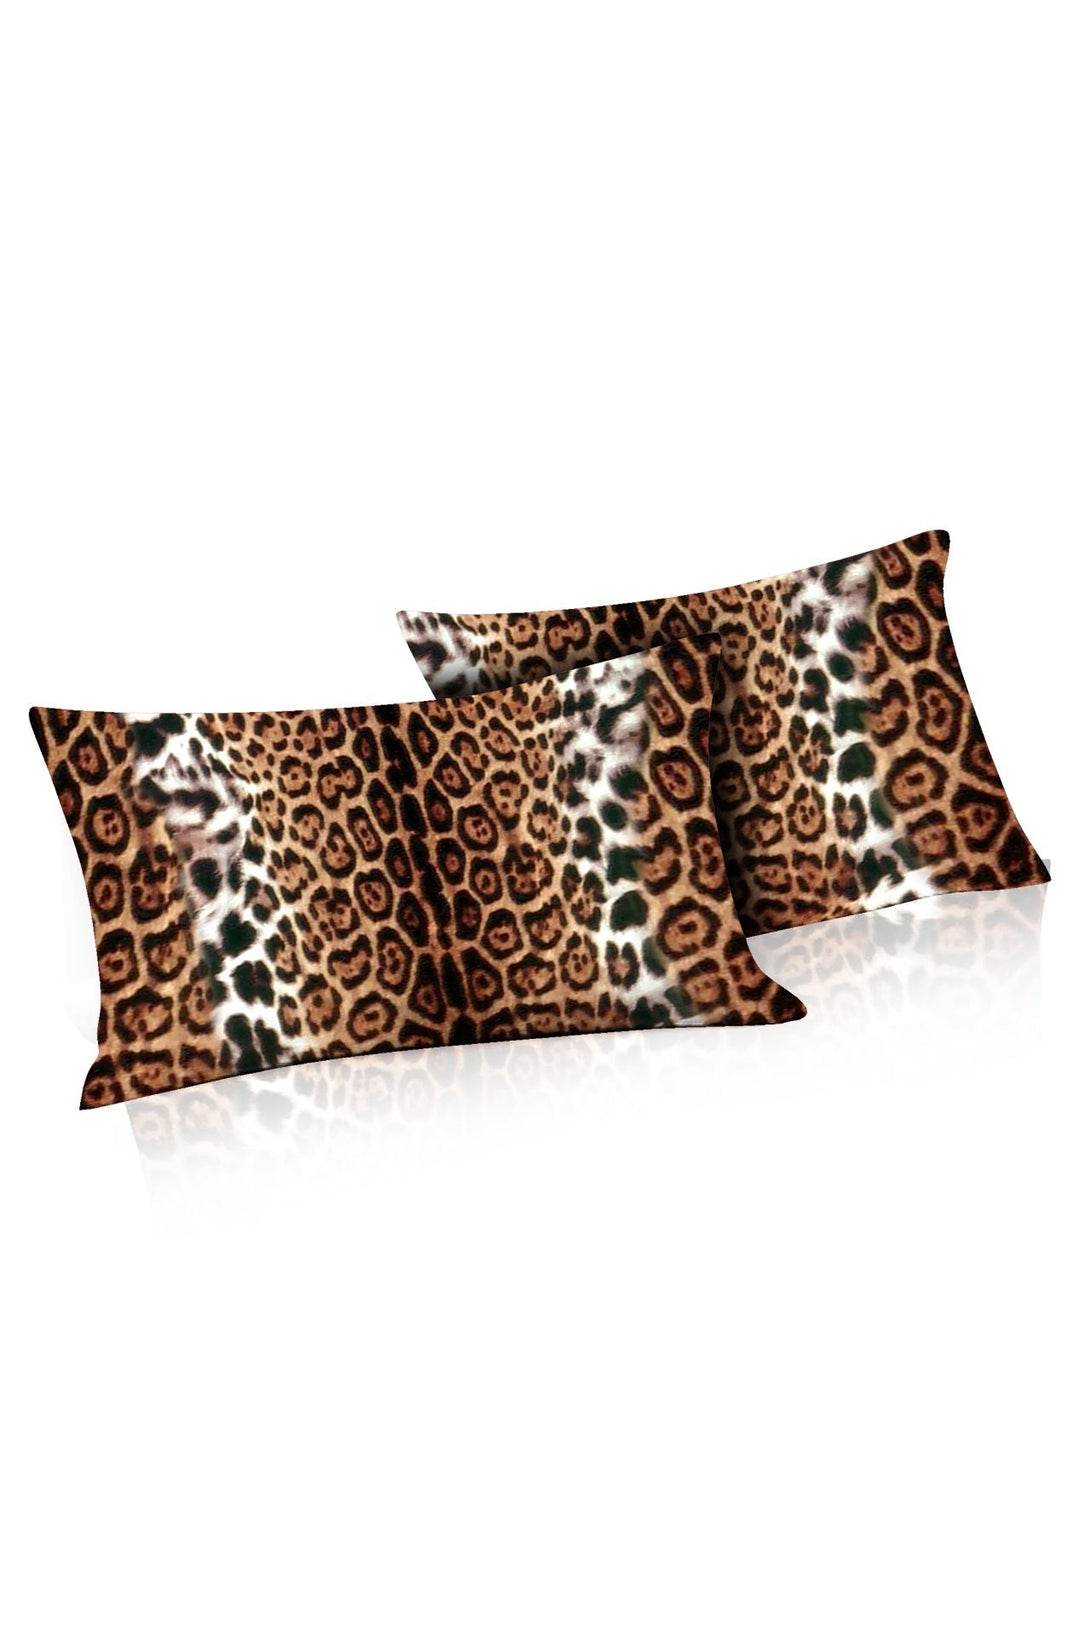 "Shahida Parides" "leopard pillows" "luxury decorative pillows" "throw pillow covers"